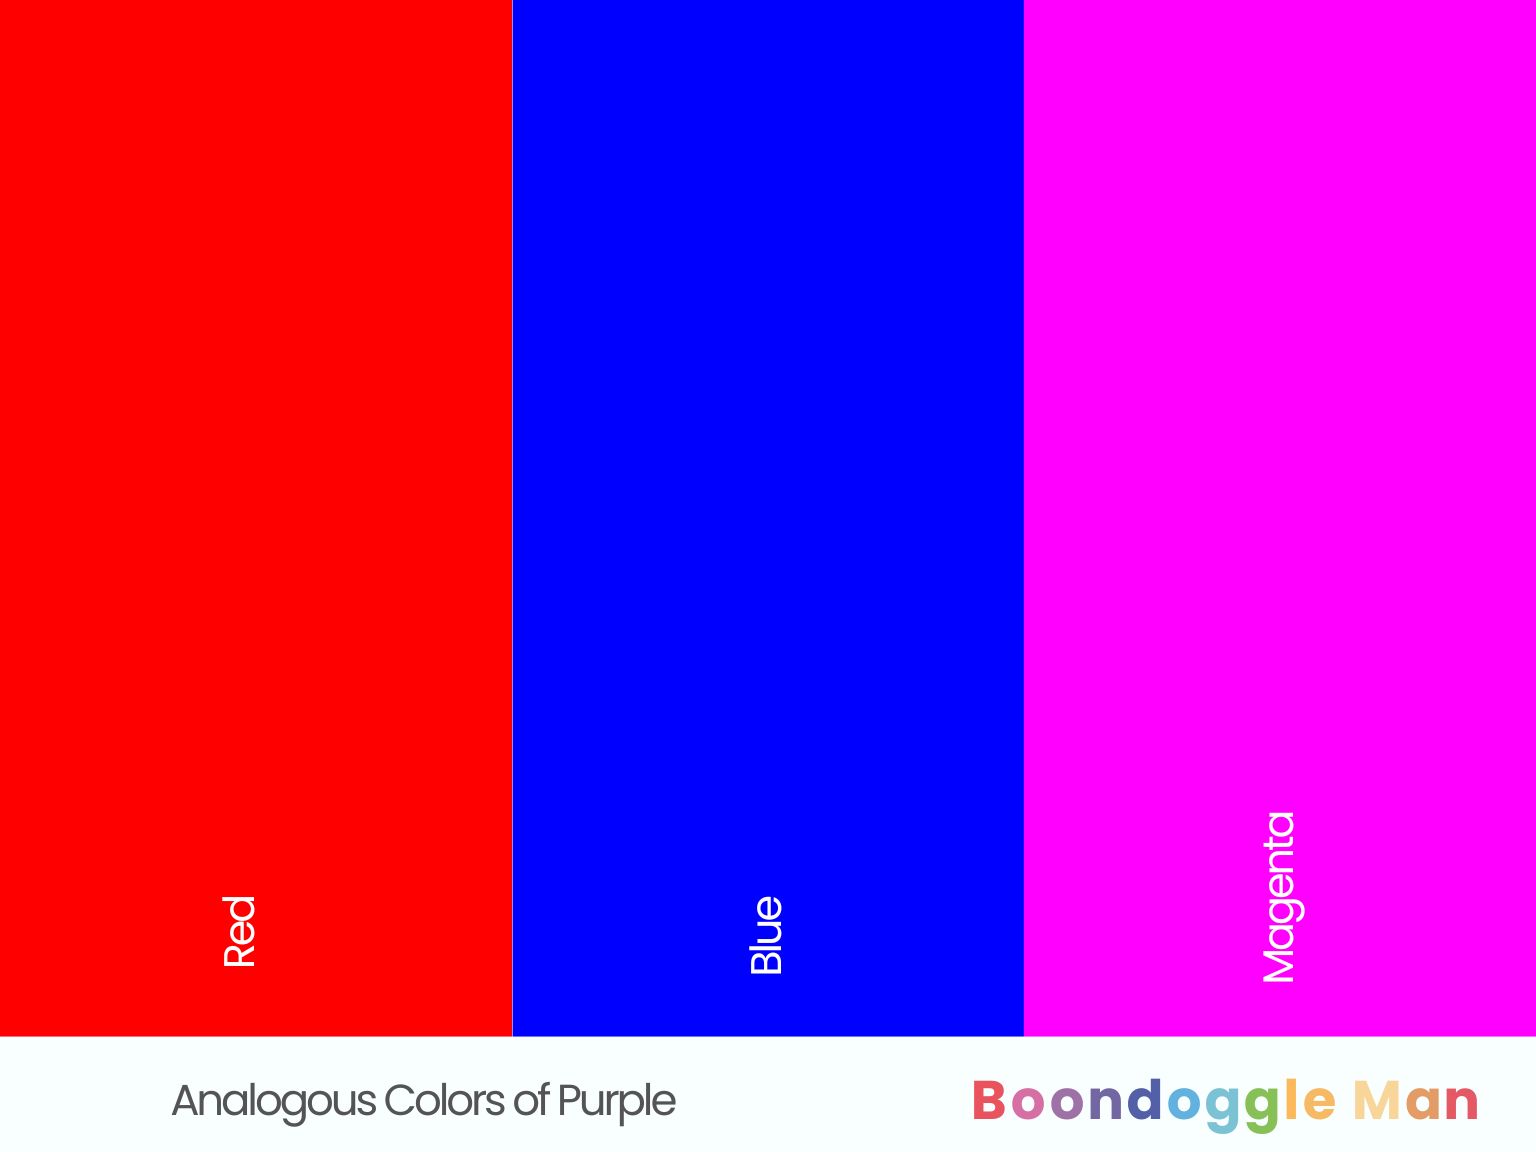 Analogous Colors of Purple